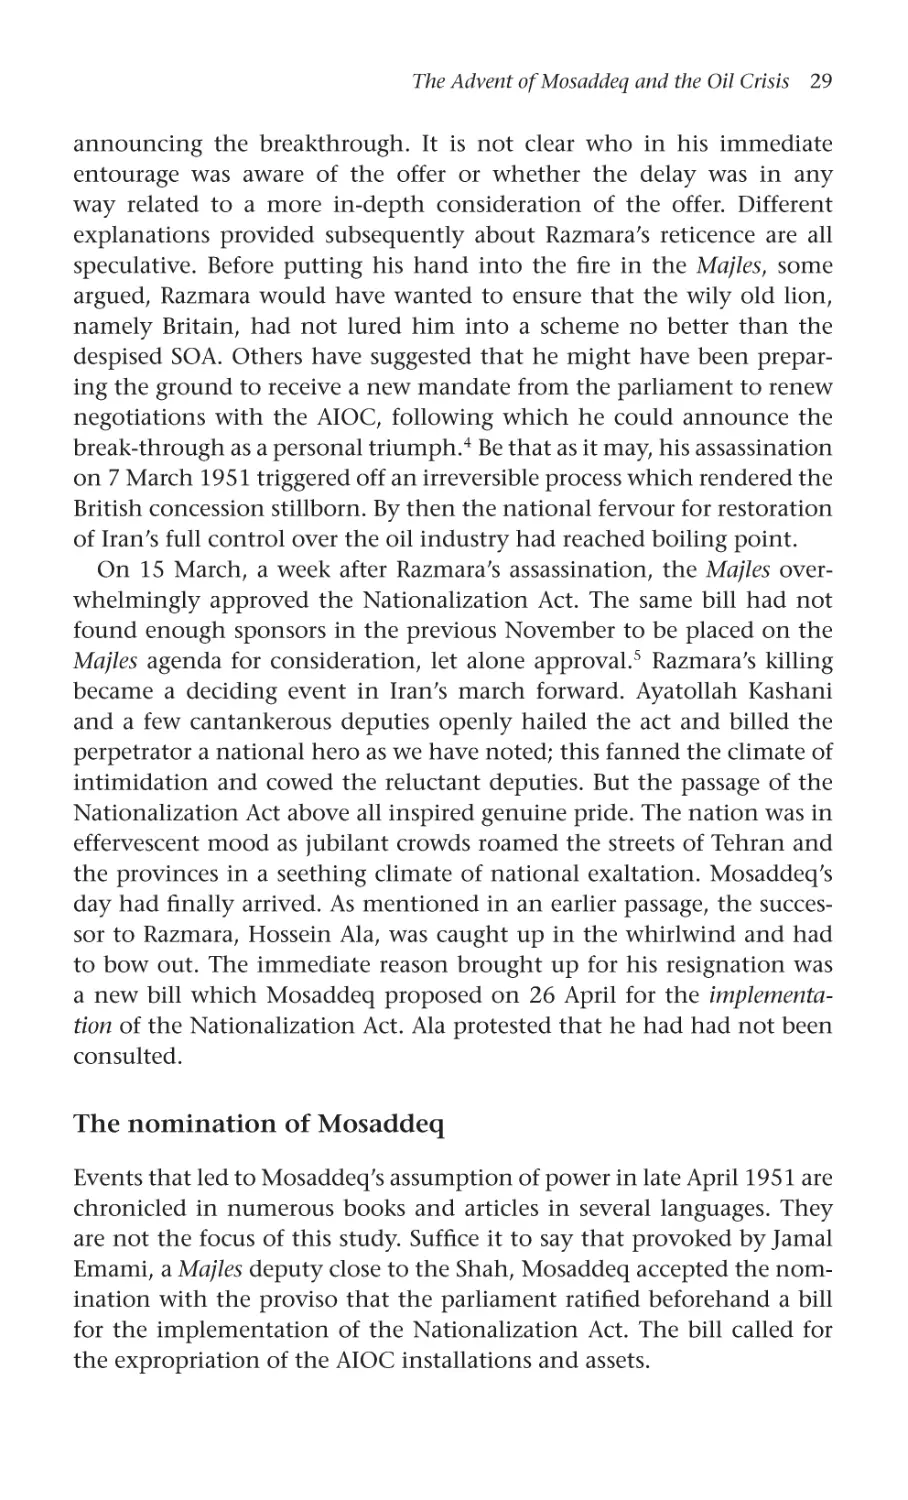 The nomination of Mosaddeq